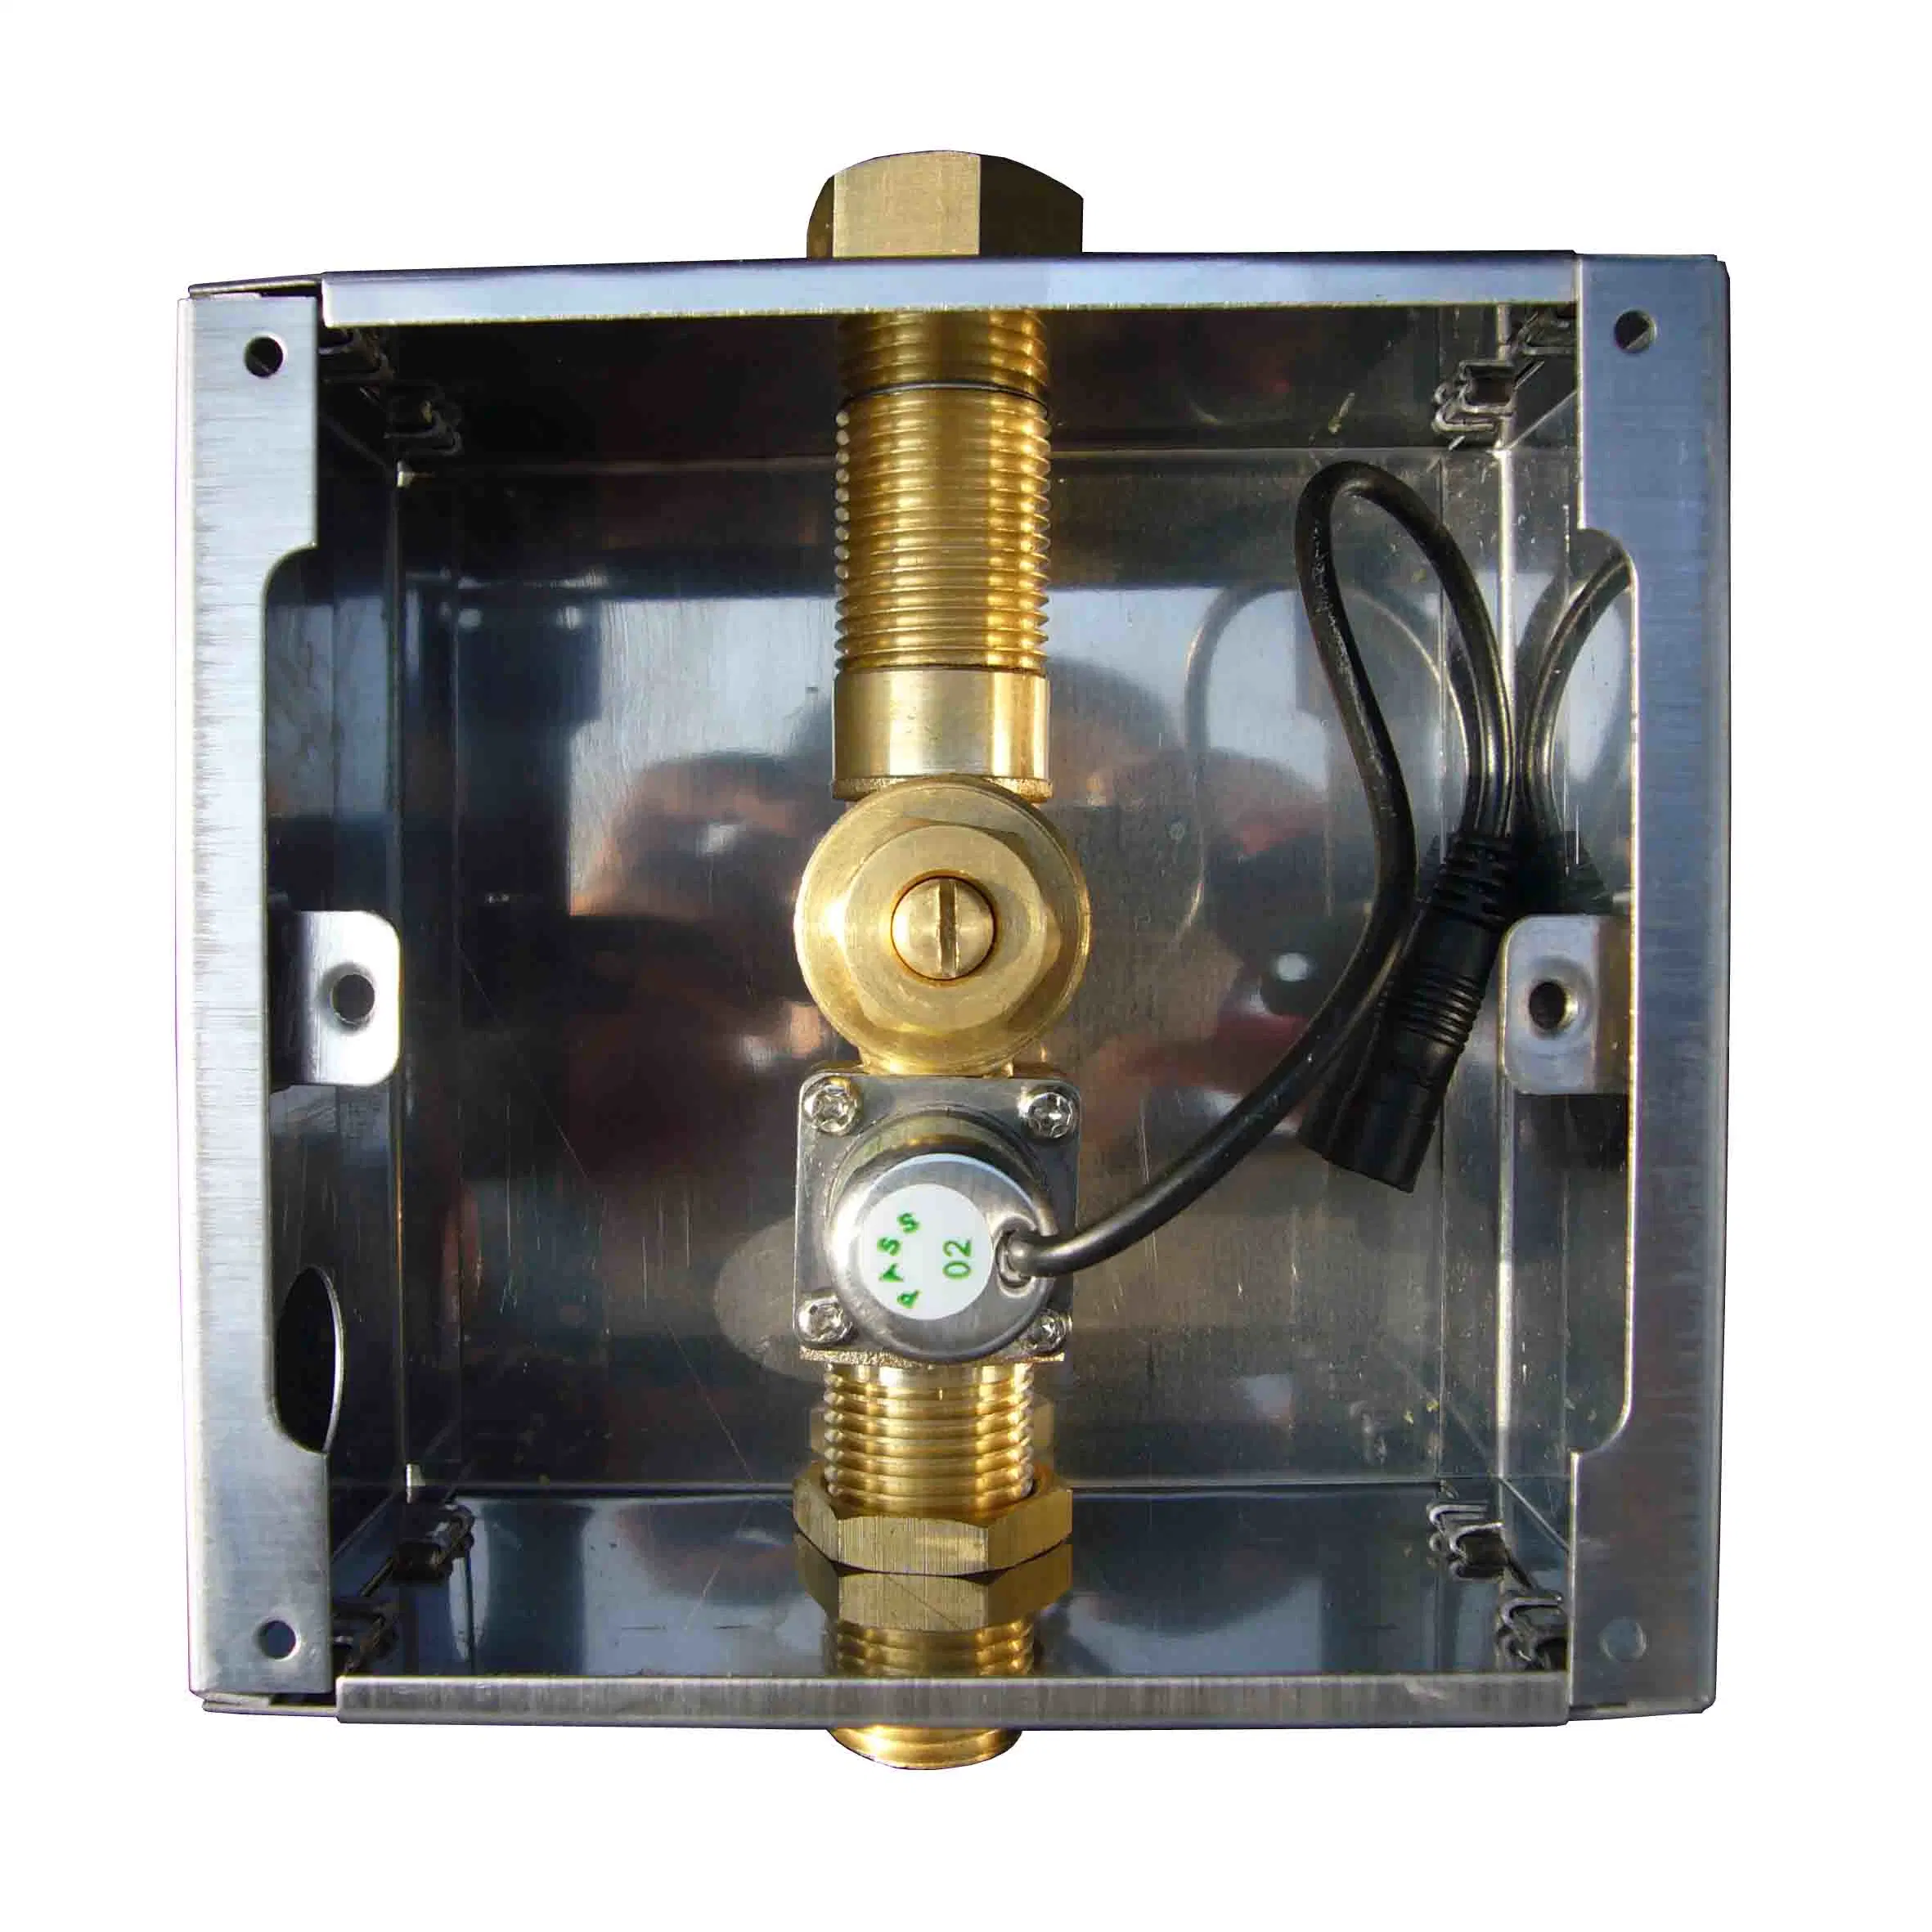 Sensor Sanitary Ware Vandal Resistant Automatic Urinal Sensor Valve for Washroom